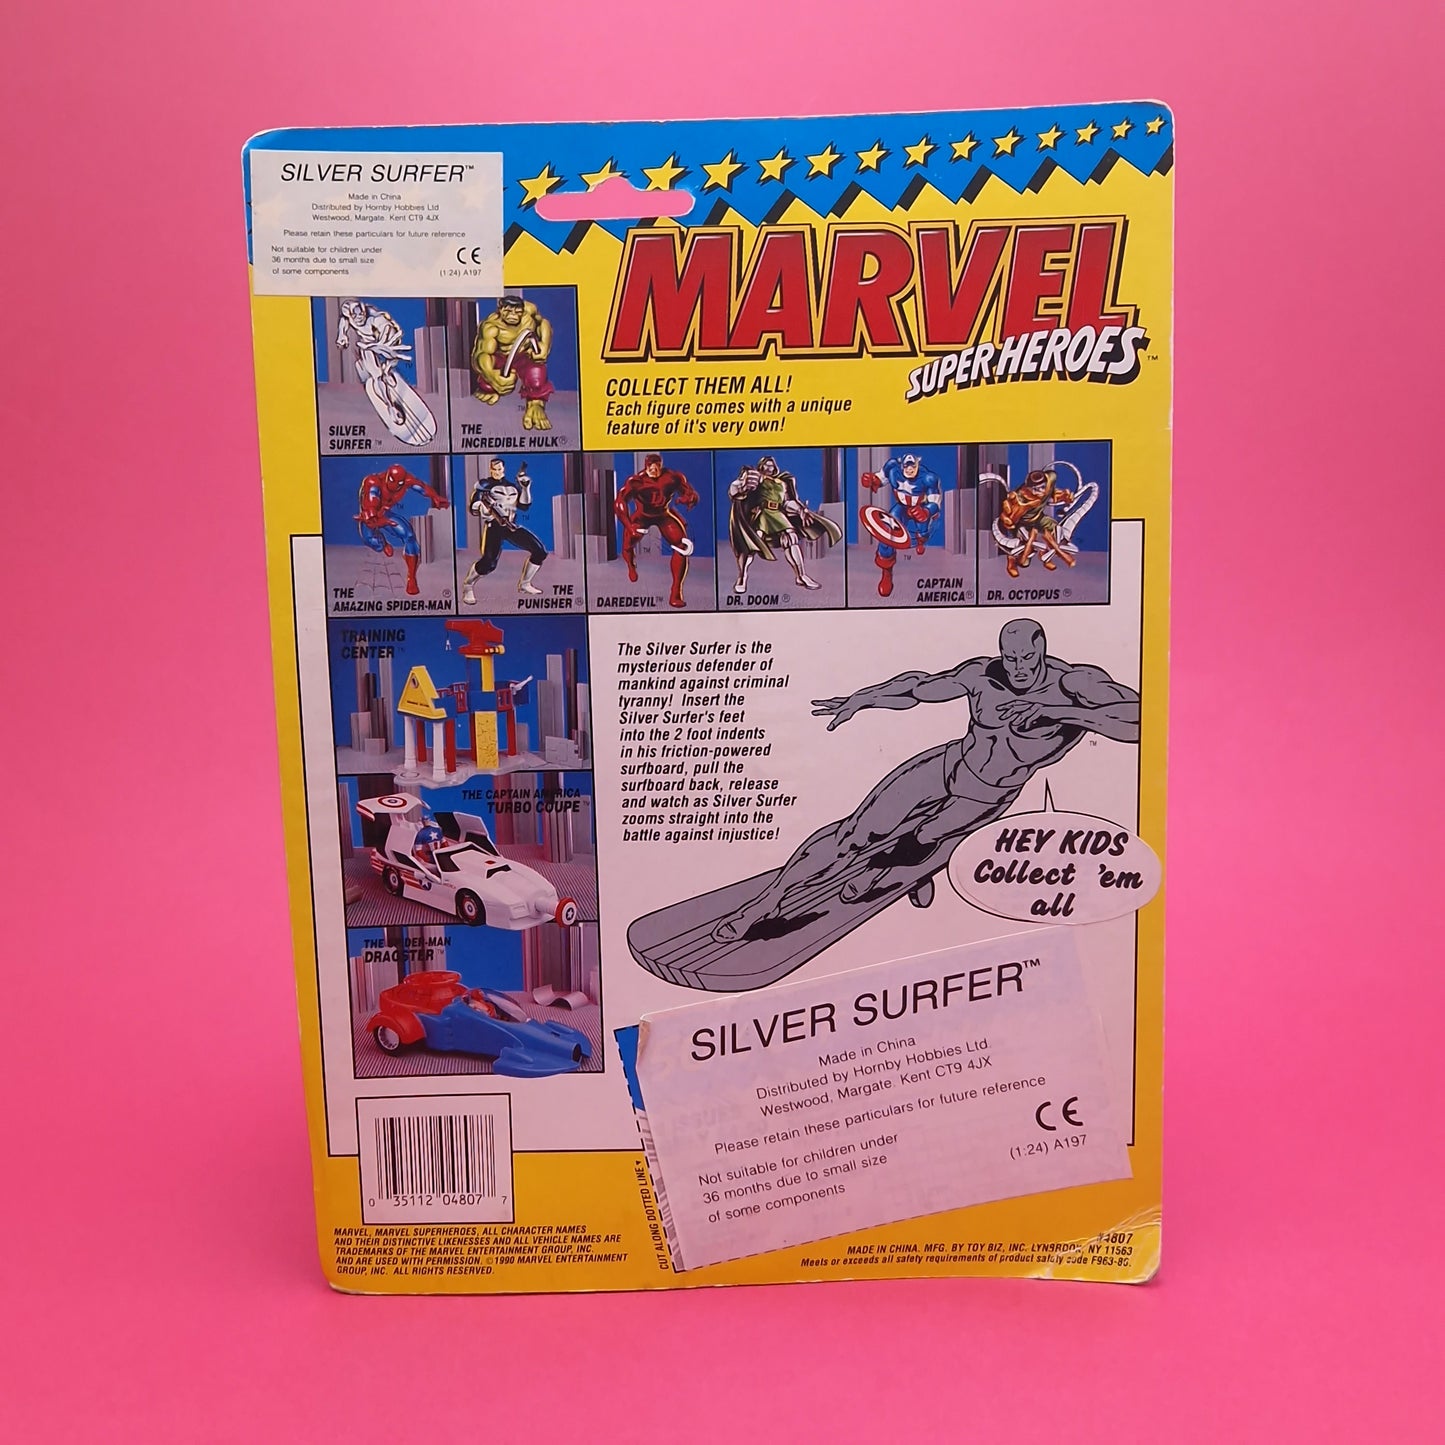 MARVEL SUPER HEROES ☆ THE SILVER SURFER Vintage Action Figure ☆ 1st edition Carded Toybiz 90s